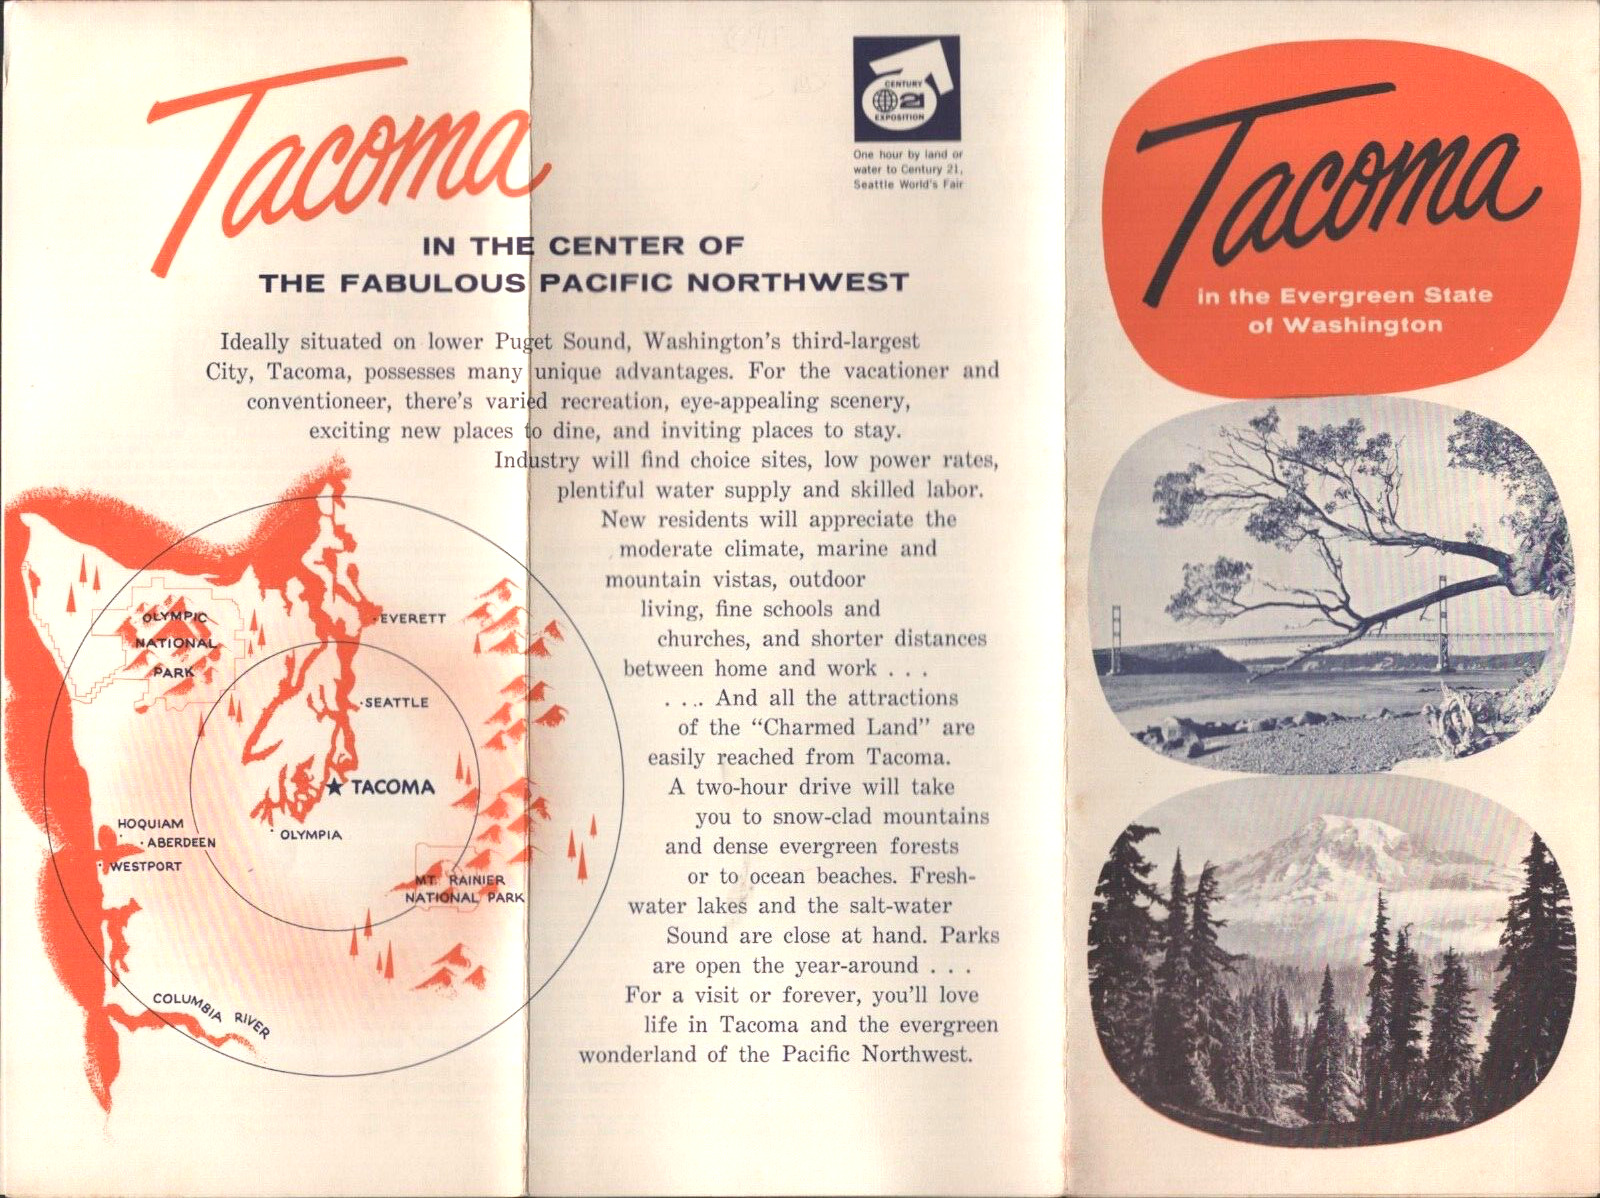 1959 TACOMA, WASHINGTON vintage tourism brochure EVERGREEN STATE with map inside